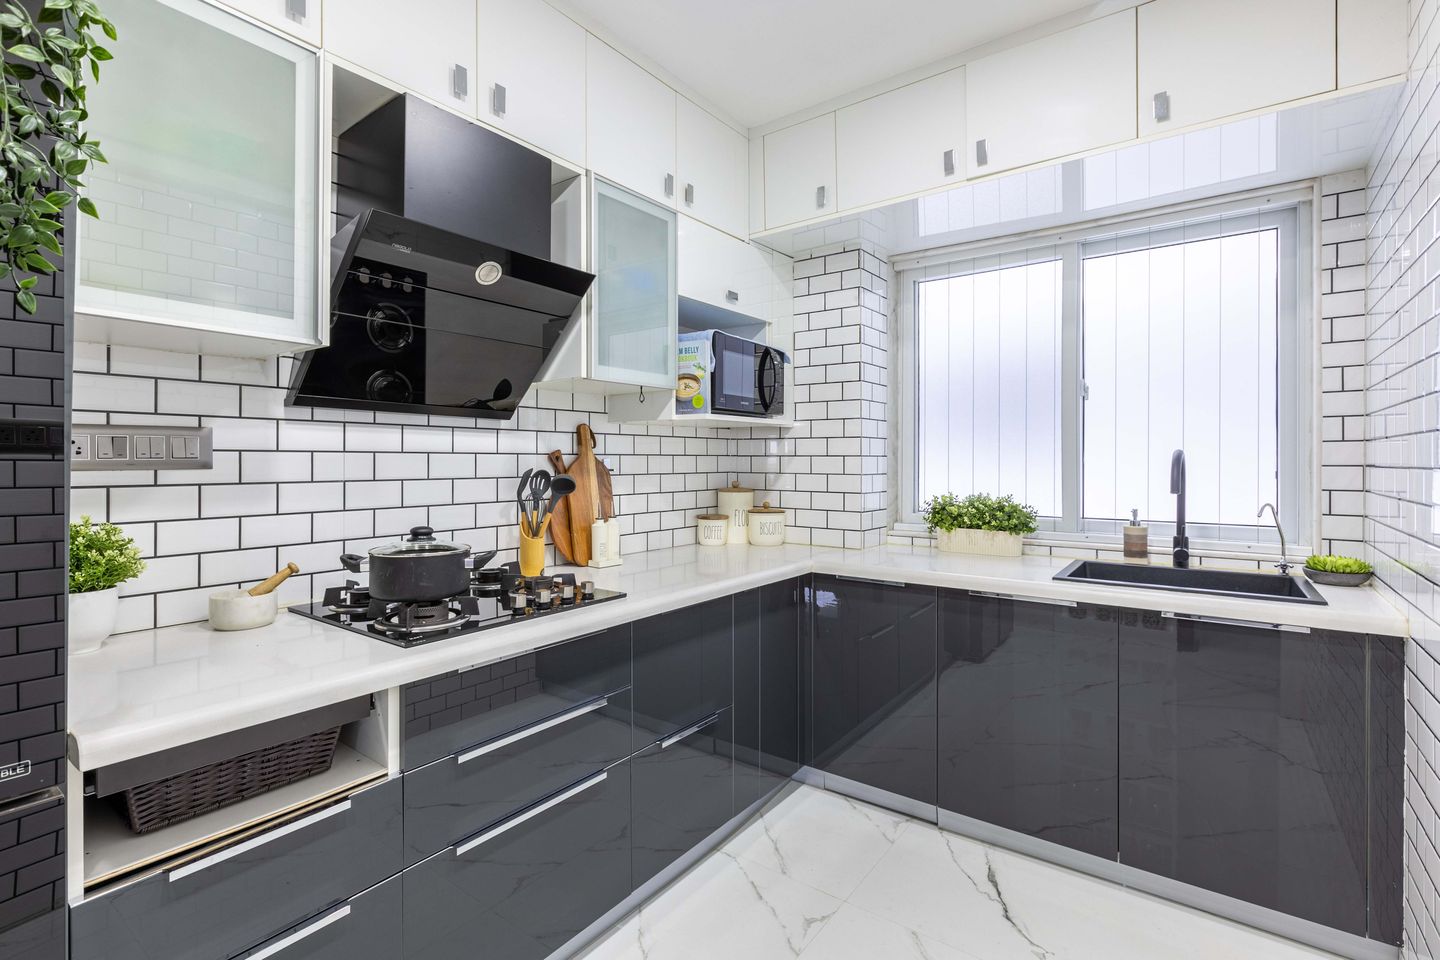 10x6 Ft L-Shaped Kitchen Design With A White Quartz Countertop - Livspace